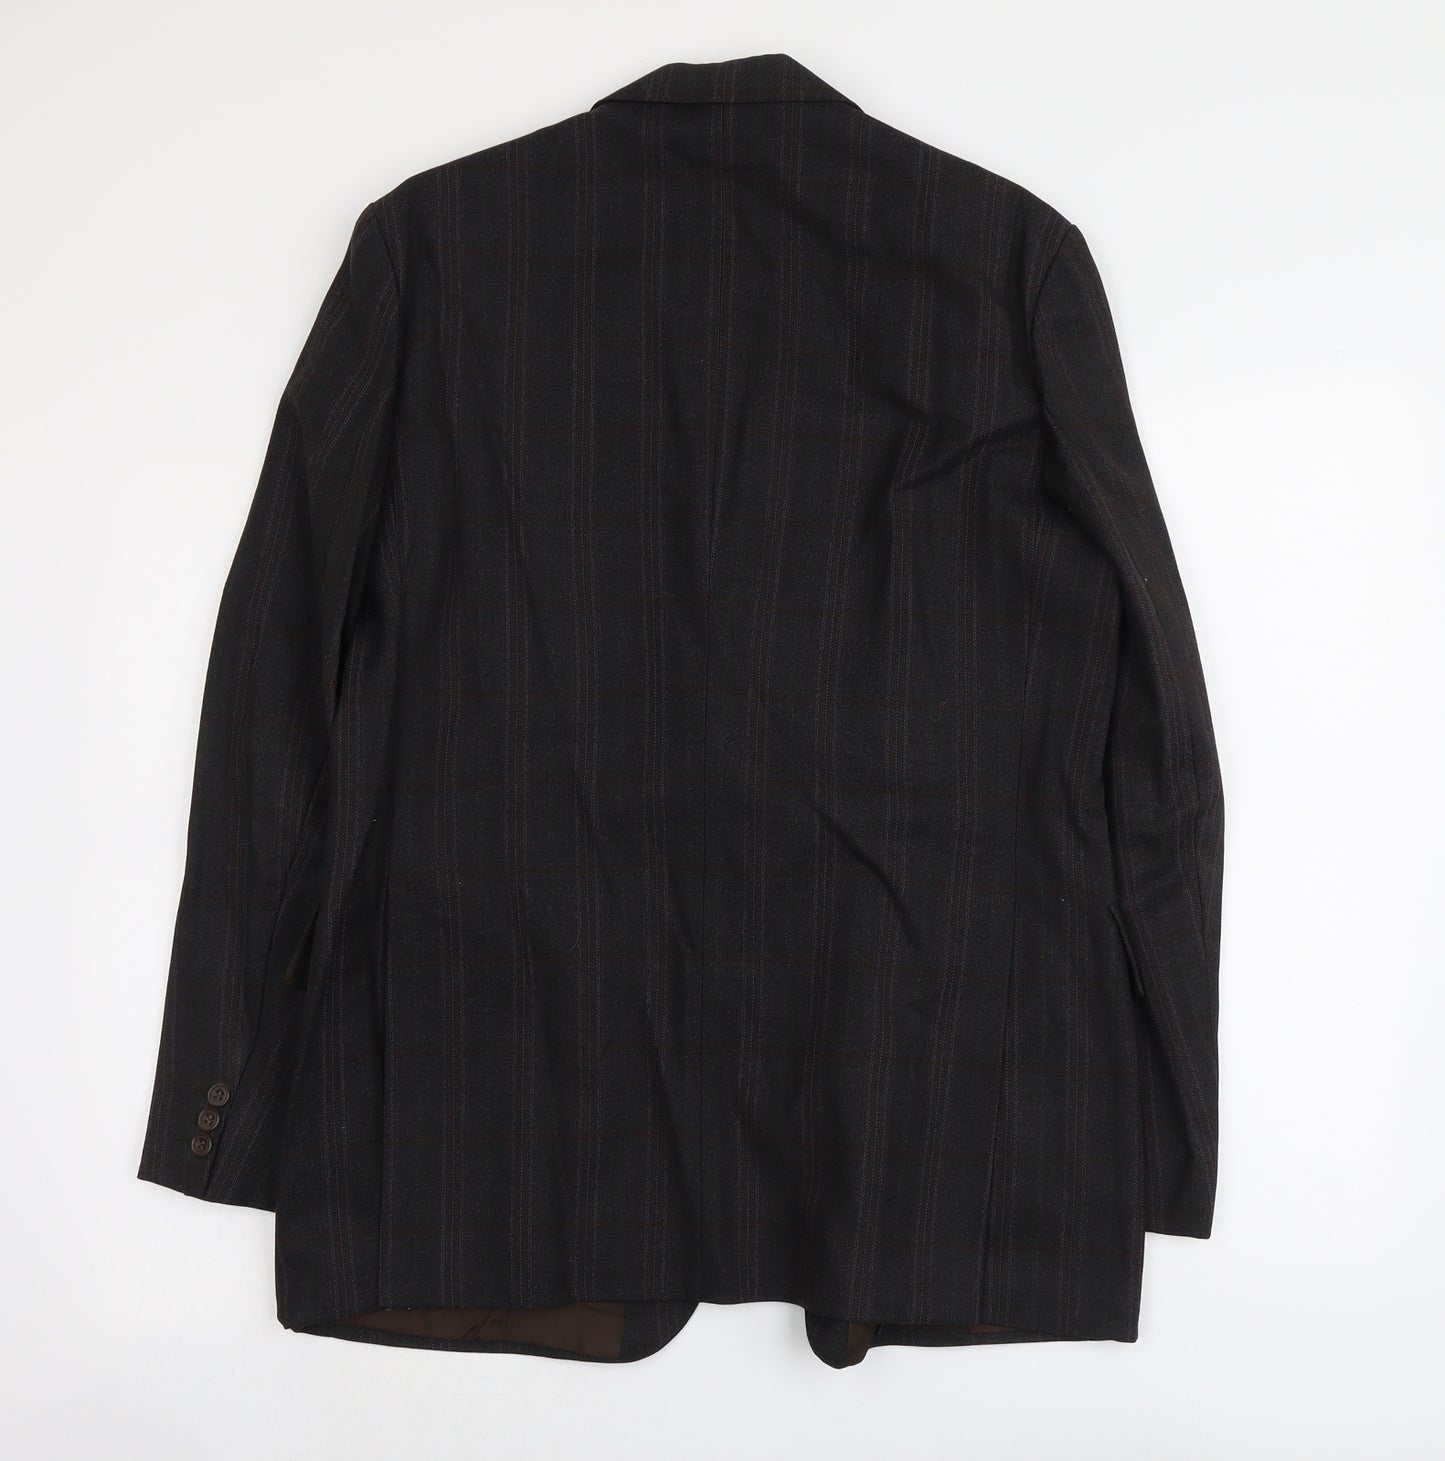 Magee Mens Black Striped Wool Jacket Suit Jacket Size L Regular